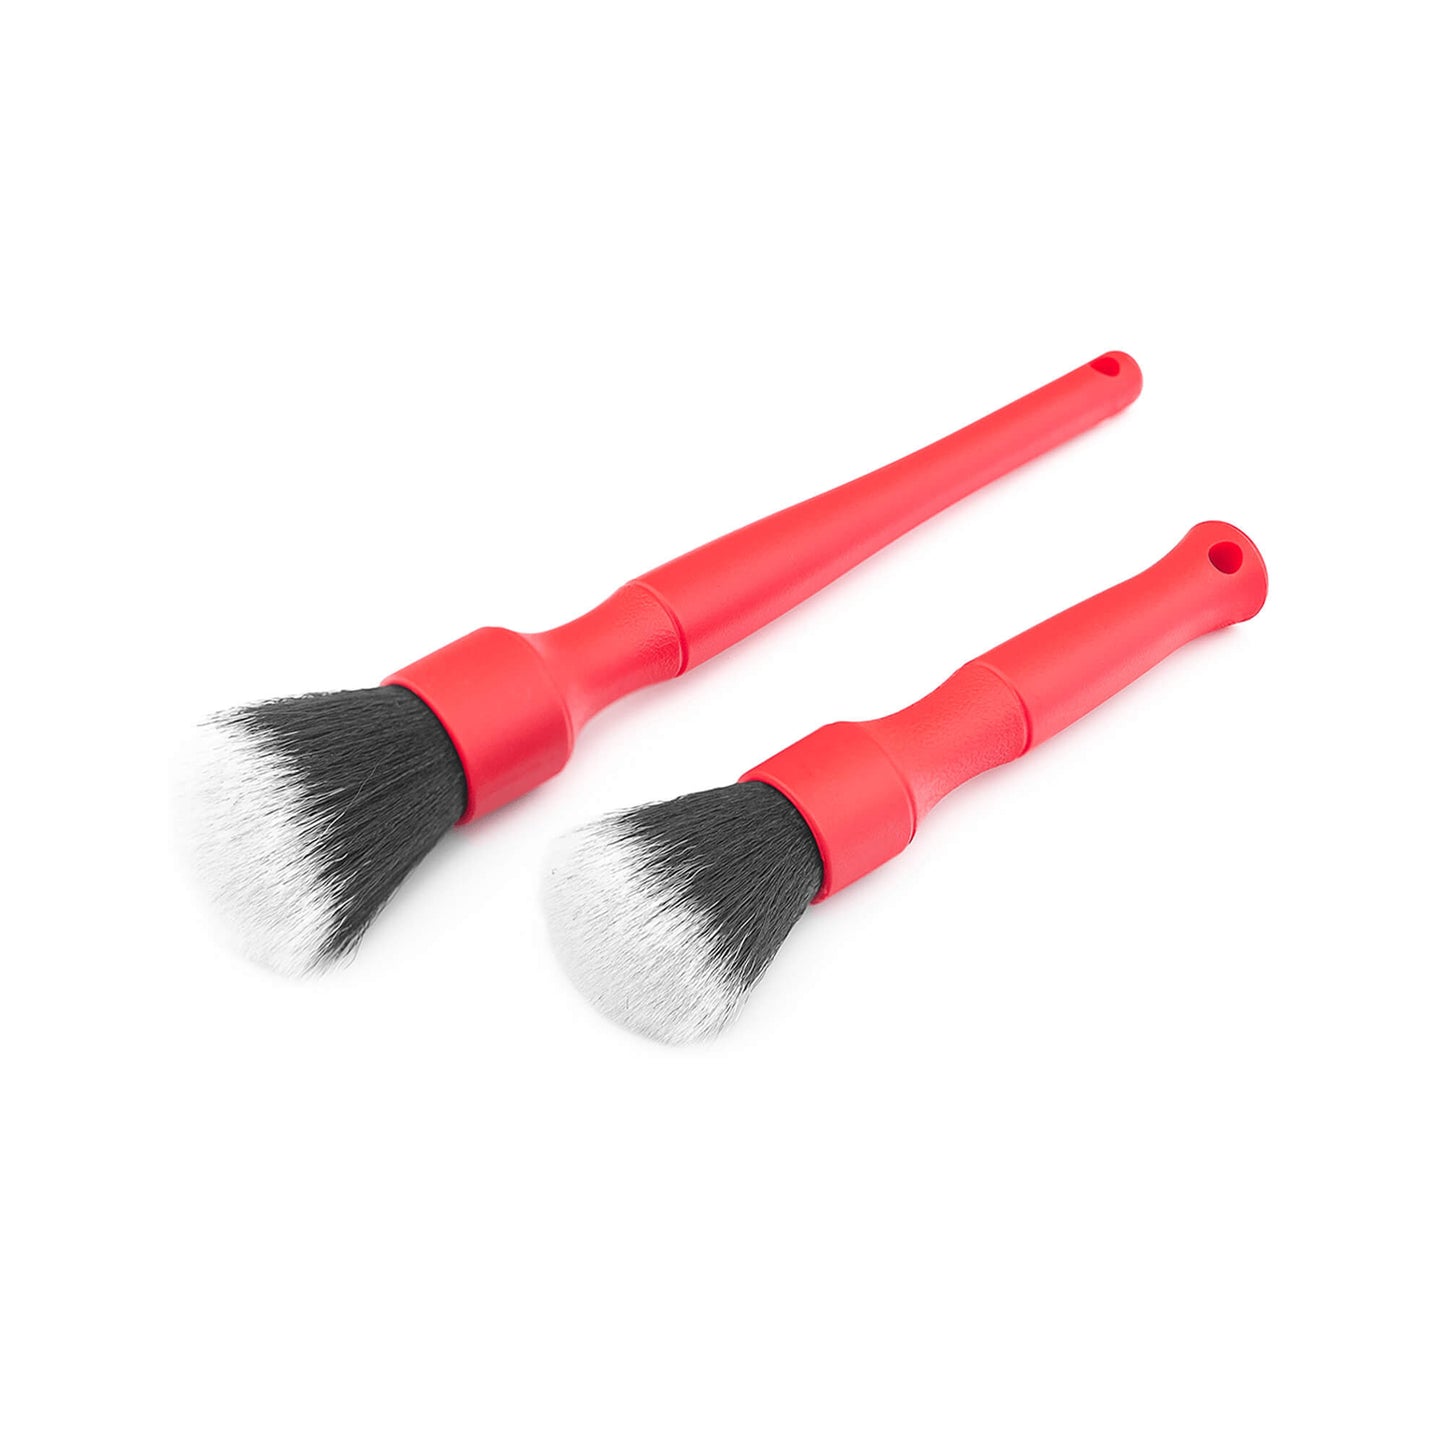 DETAIL FACTORY Detailing Brushes